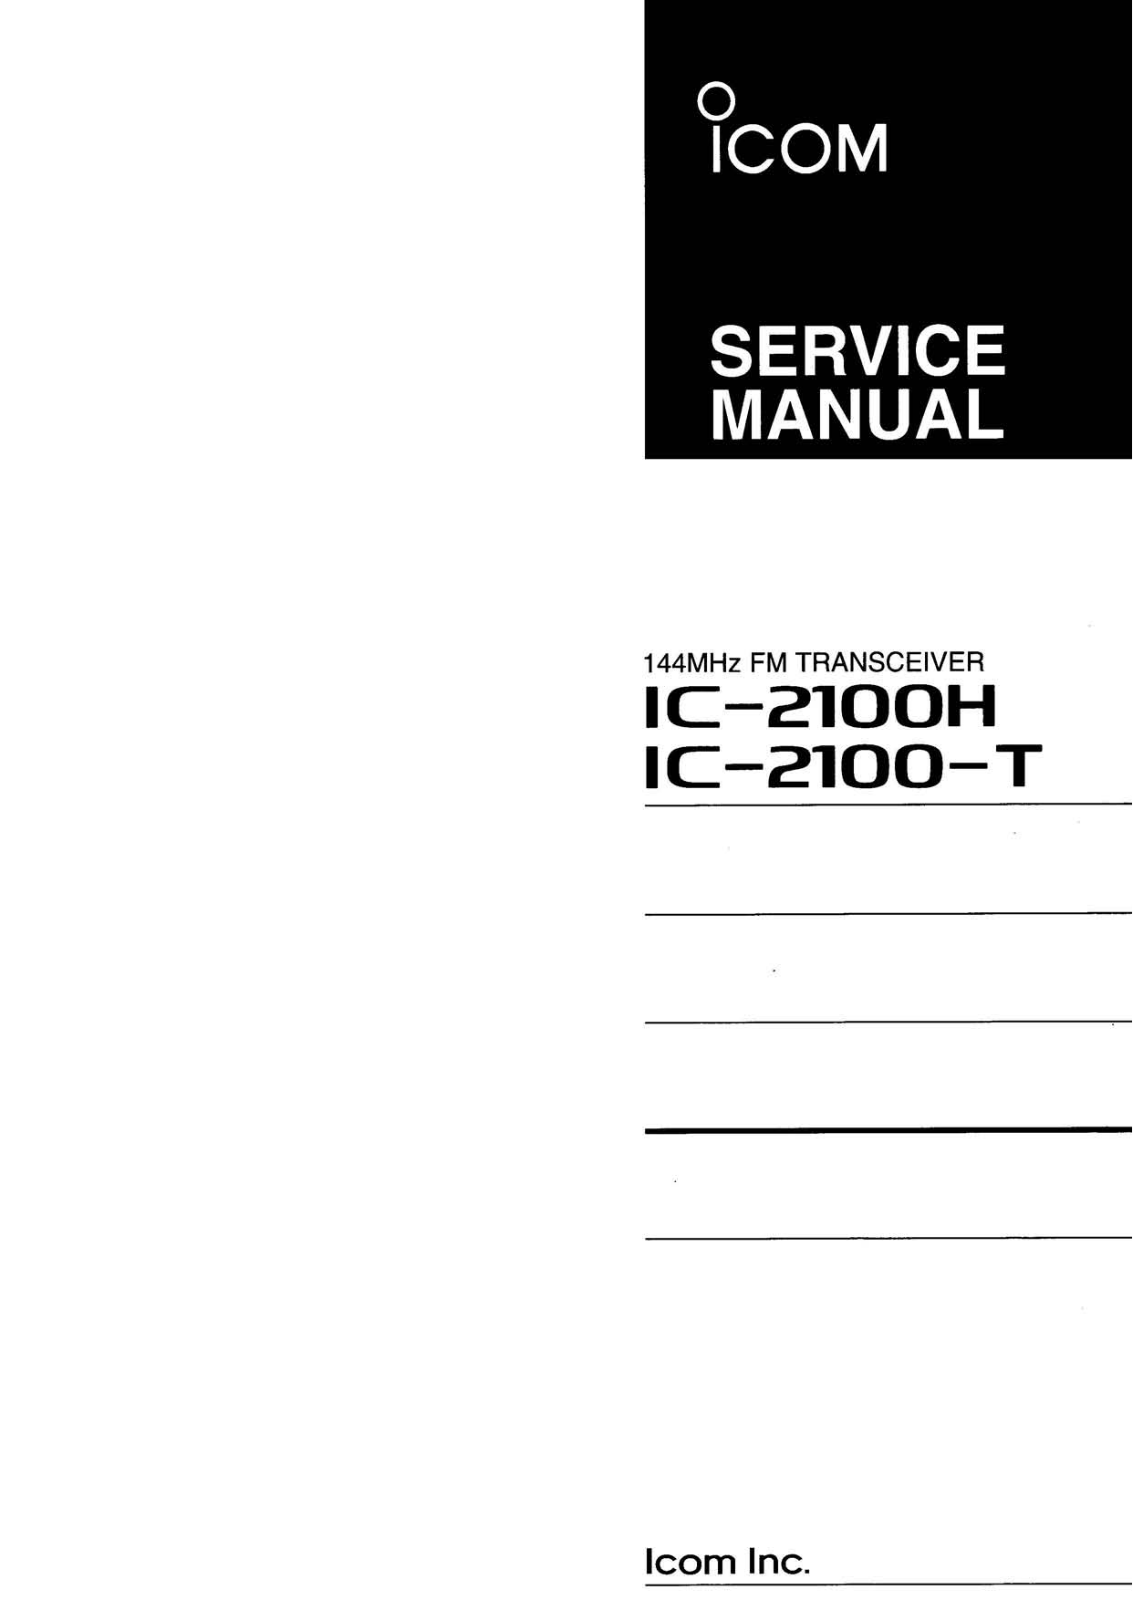 Icom IC-2100-T, IC-2100H Service Manual